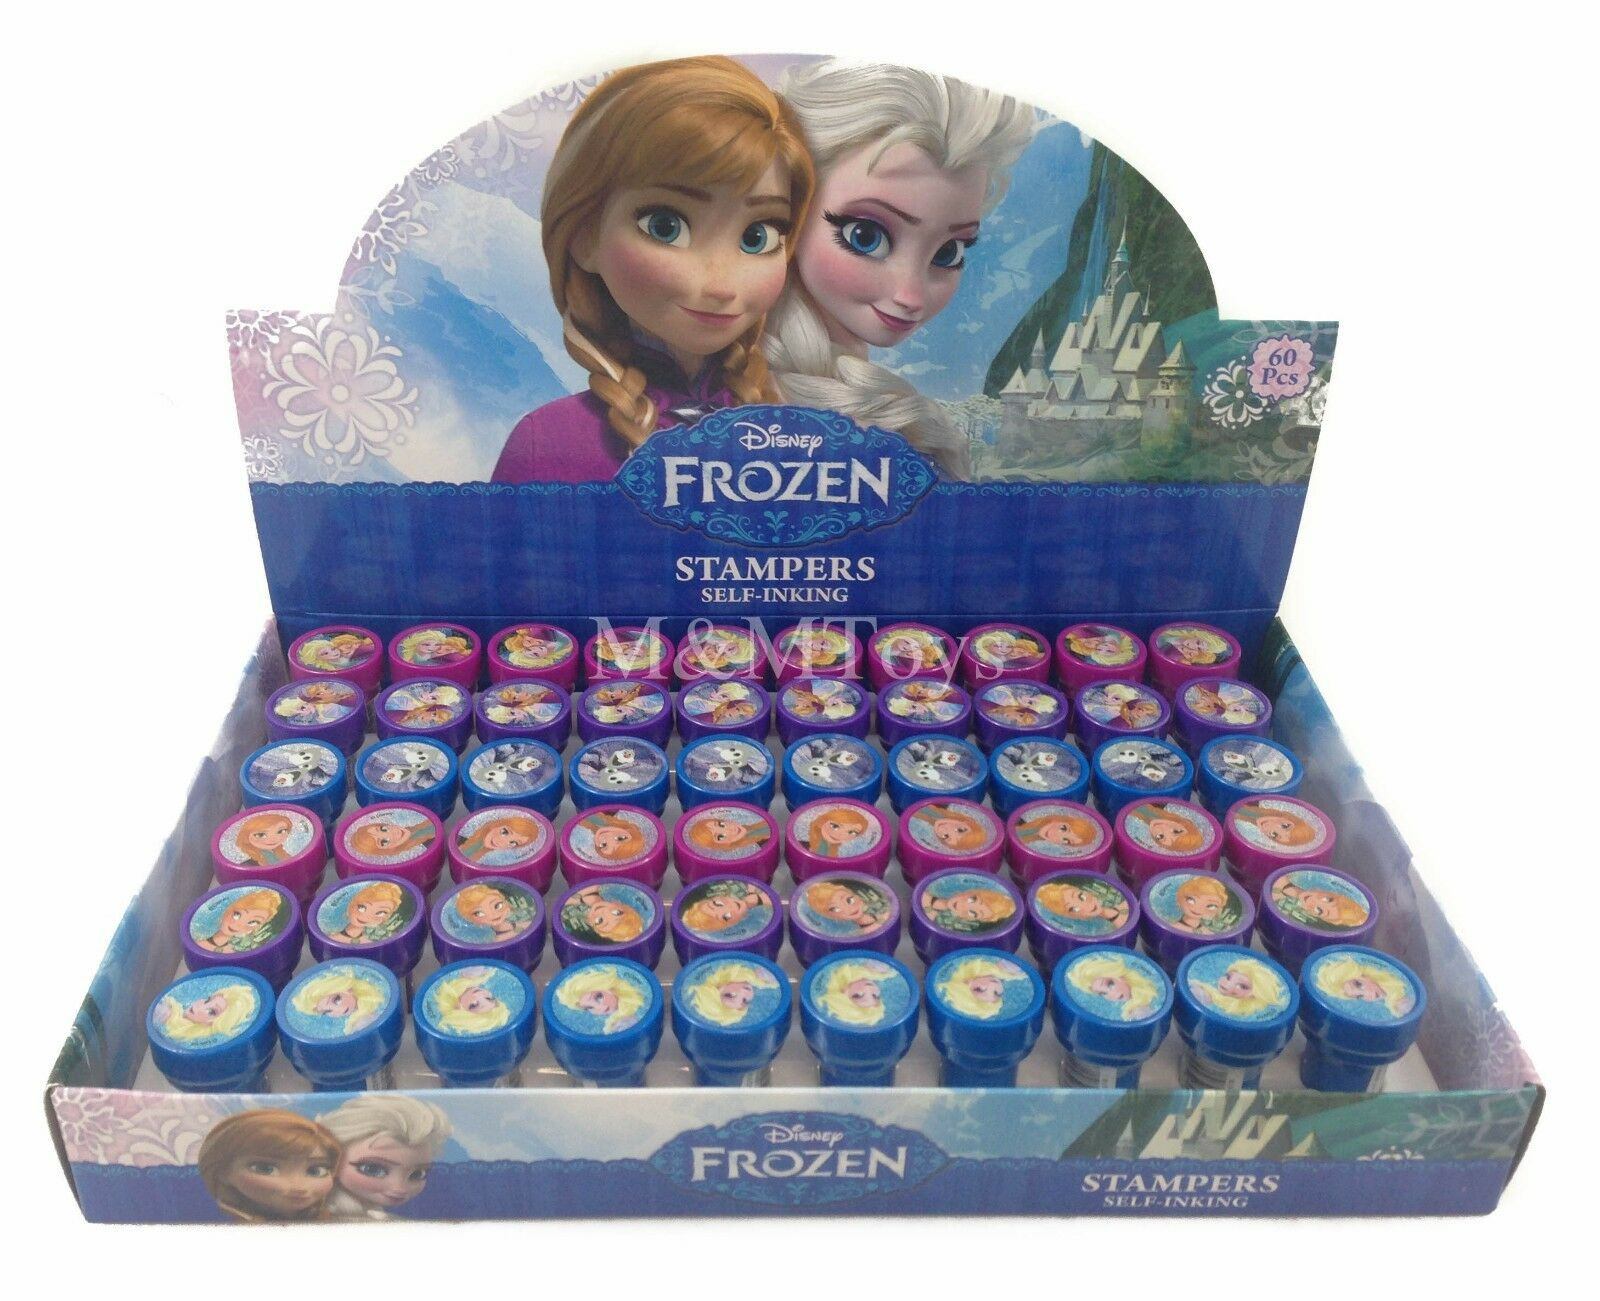 Elsa Birthday Party Supplies
 12PC Disney Frozen Anna Elsa Olaf Stampers Self Inking